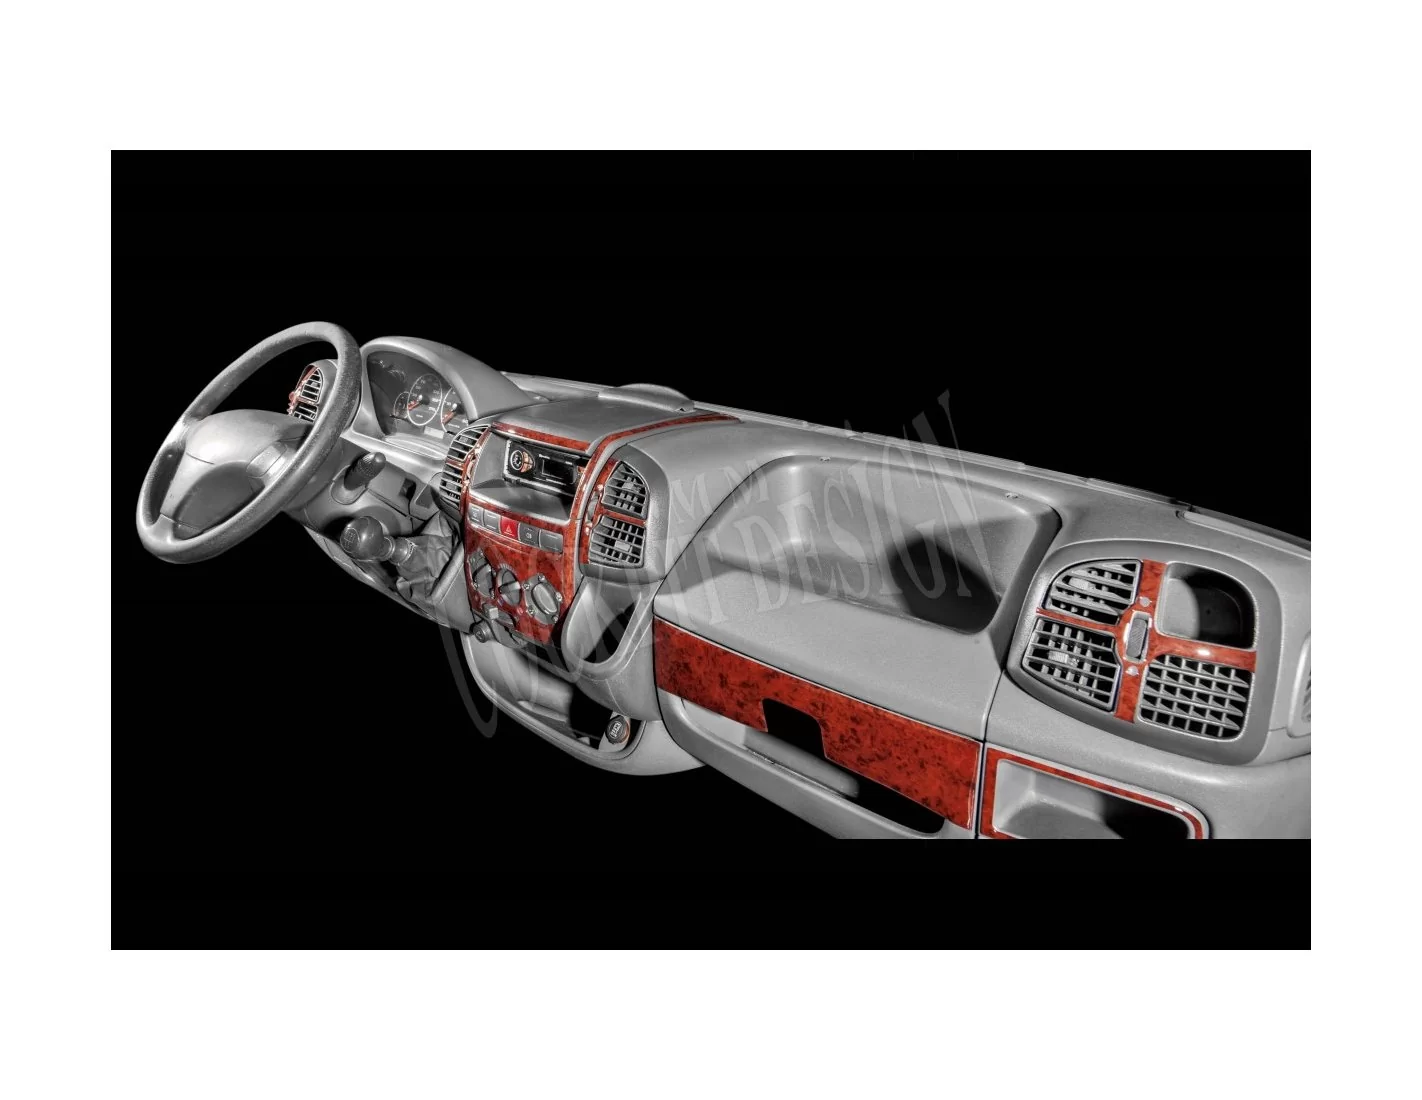 Fiat Ducato 03.02-01.06 3D Interior Dashboard Trim Kit Dash Trim Dekor 15-Parts